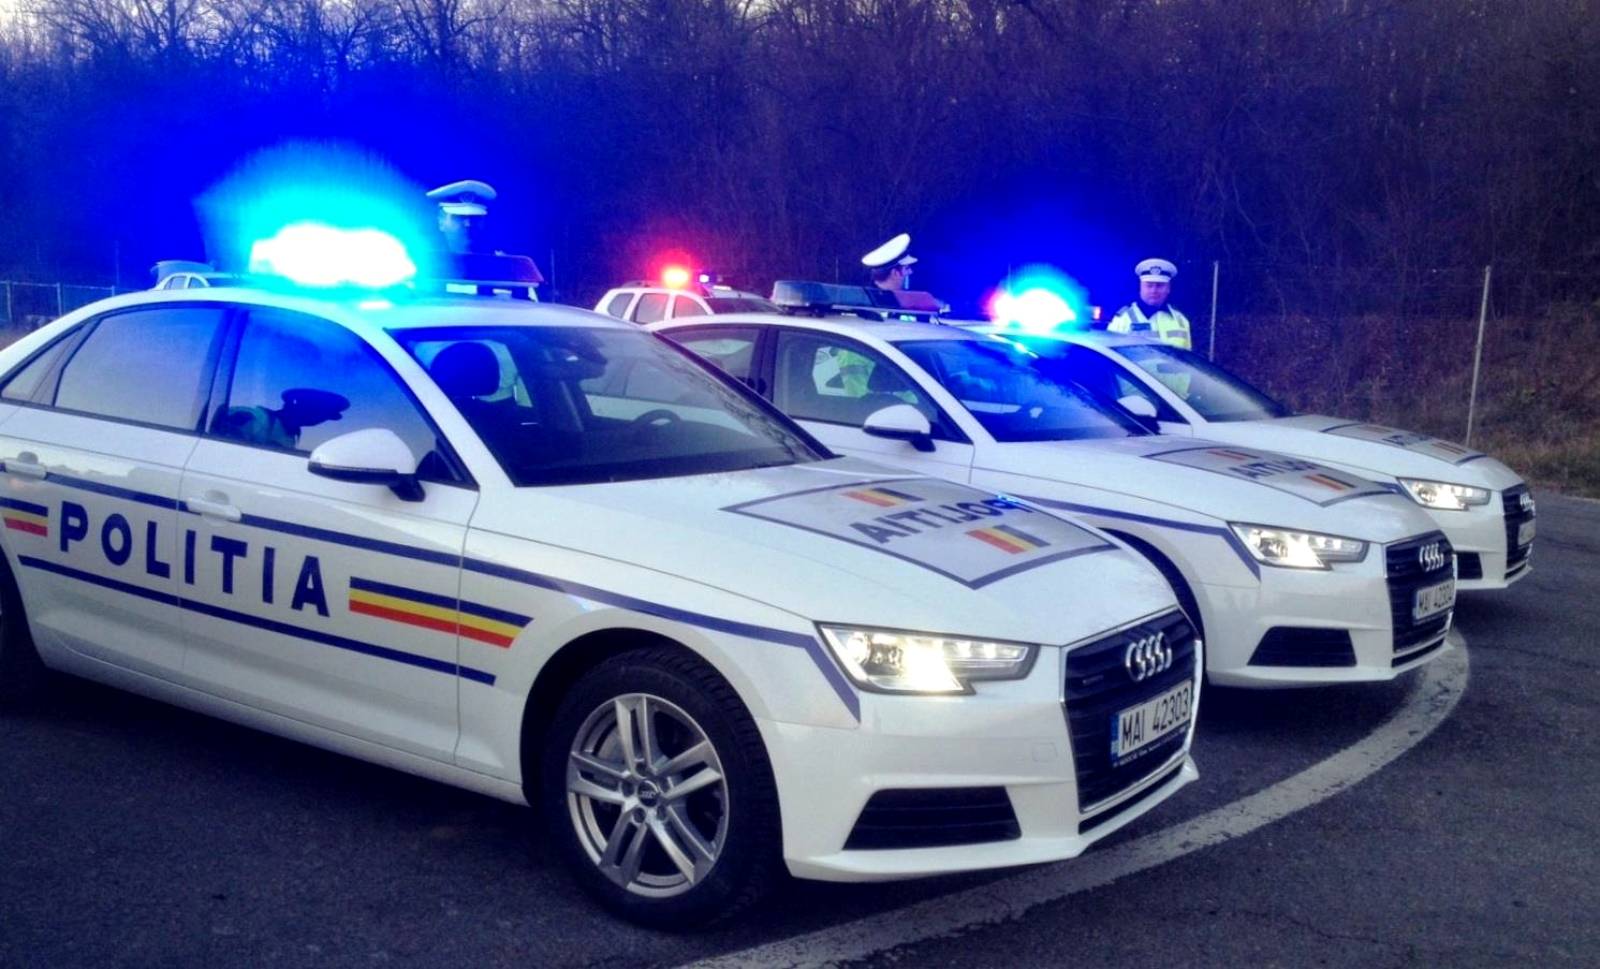 Romanian police transport workplace